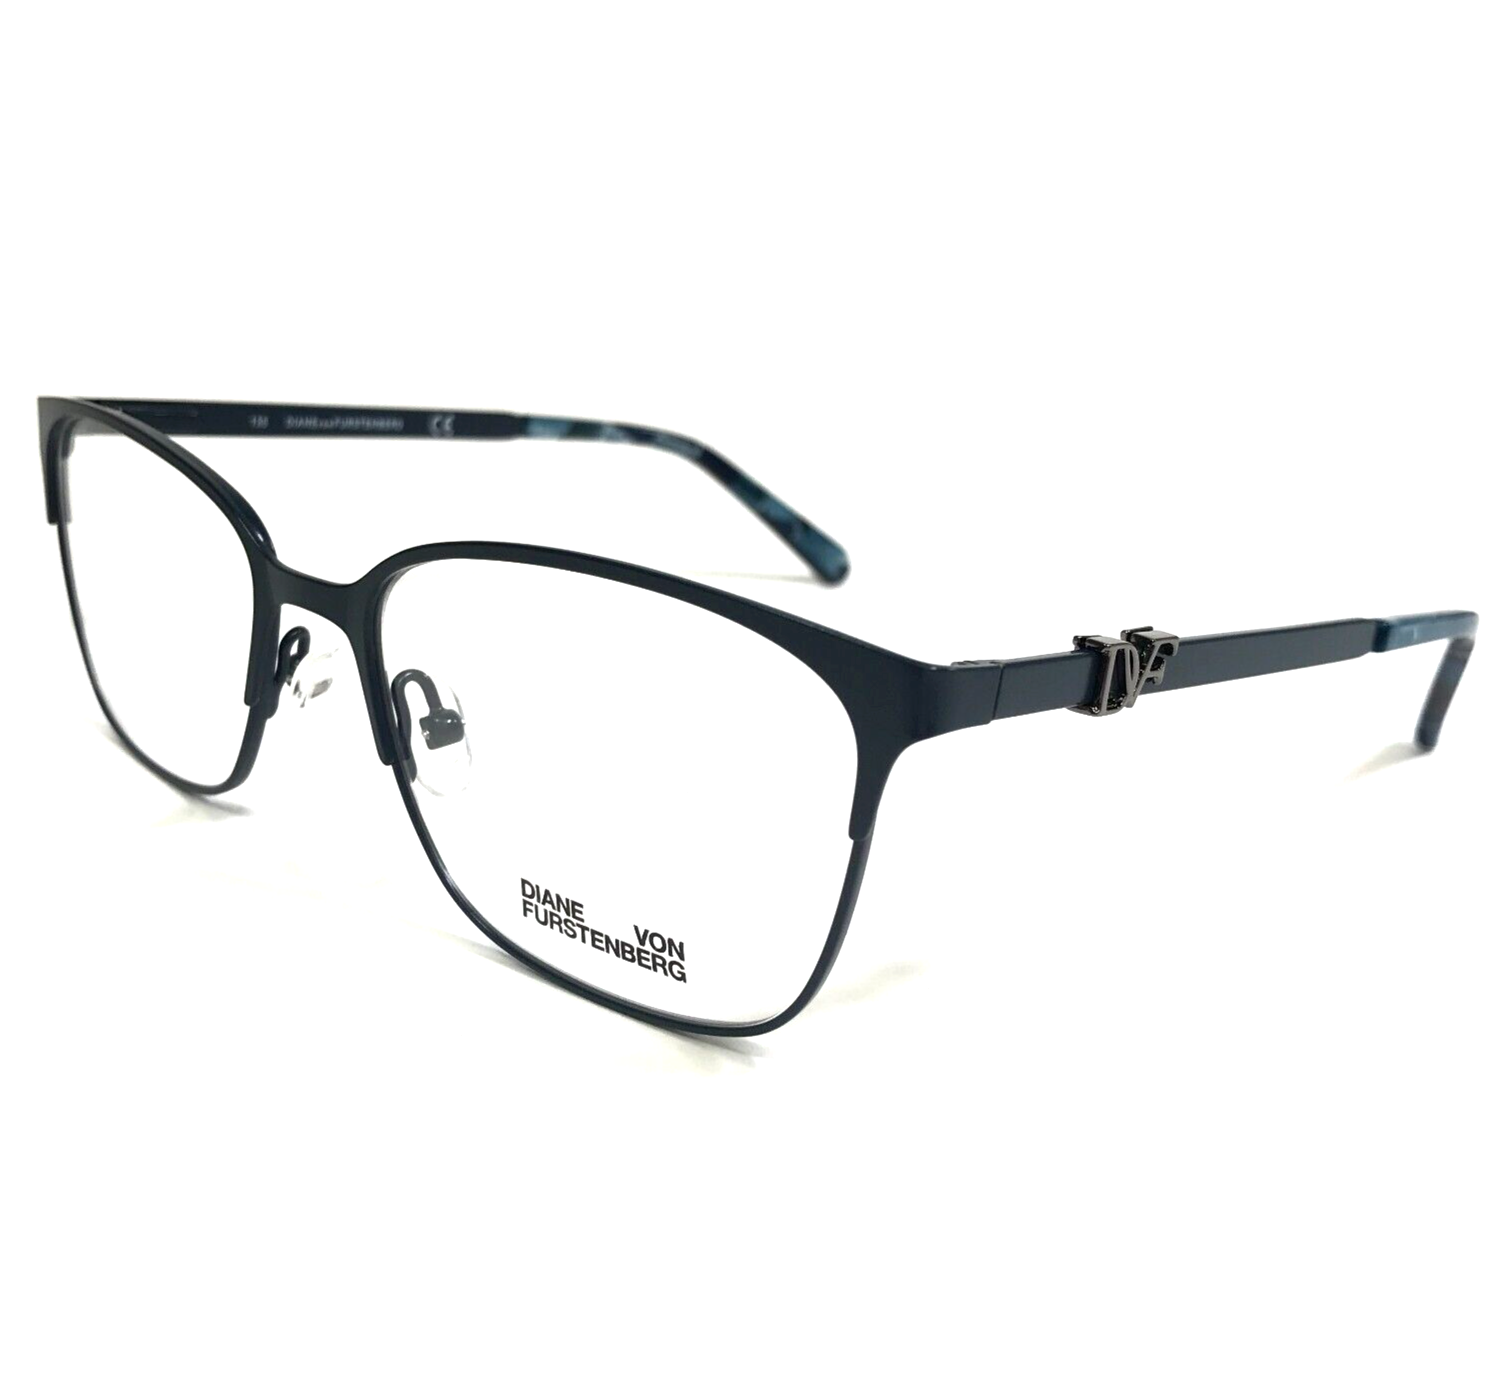 Primary image for Diane Von Furstenberg Eyeglasses Frames DVF8058 540 Navy Blue Square 53-16-135